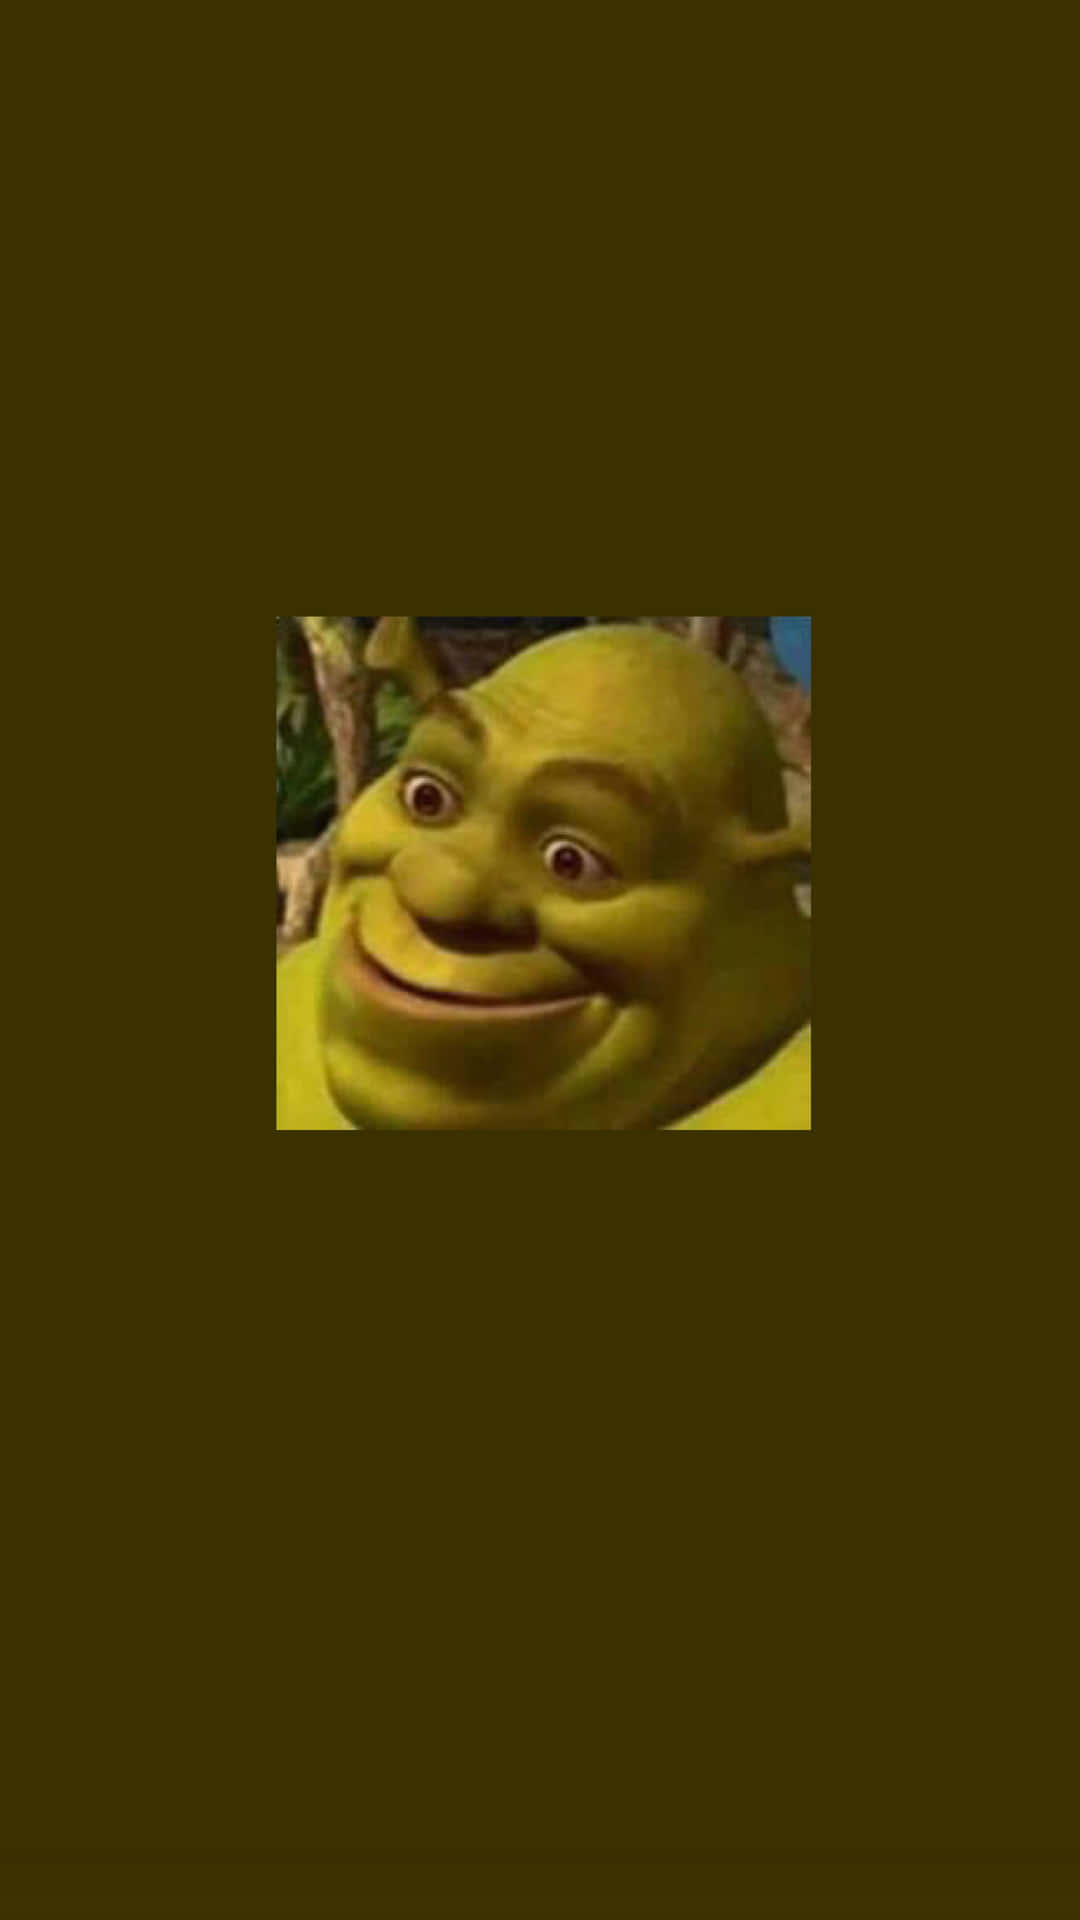 Shrek Making a Funny Face